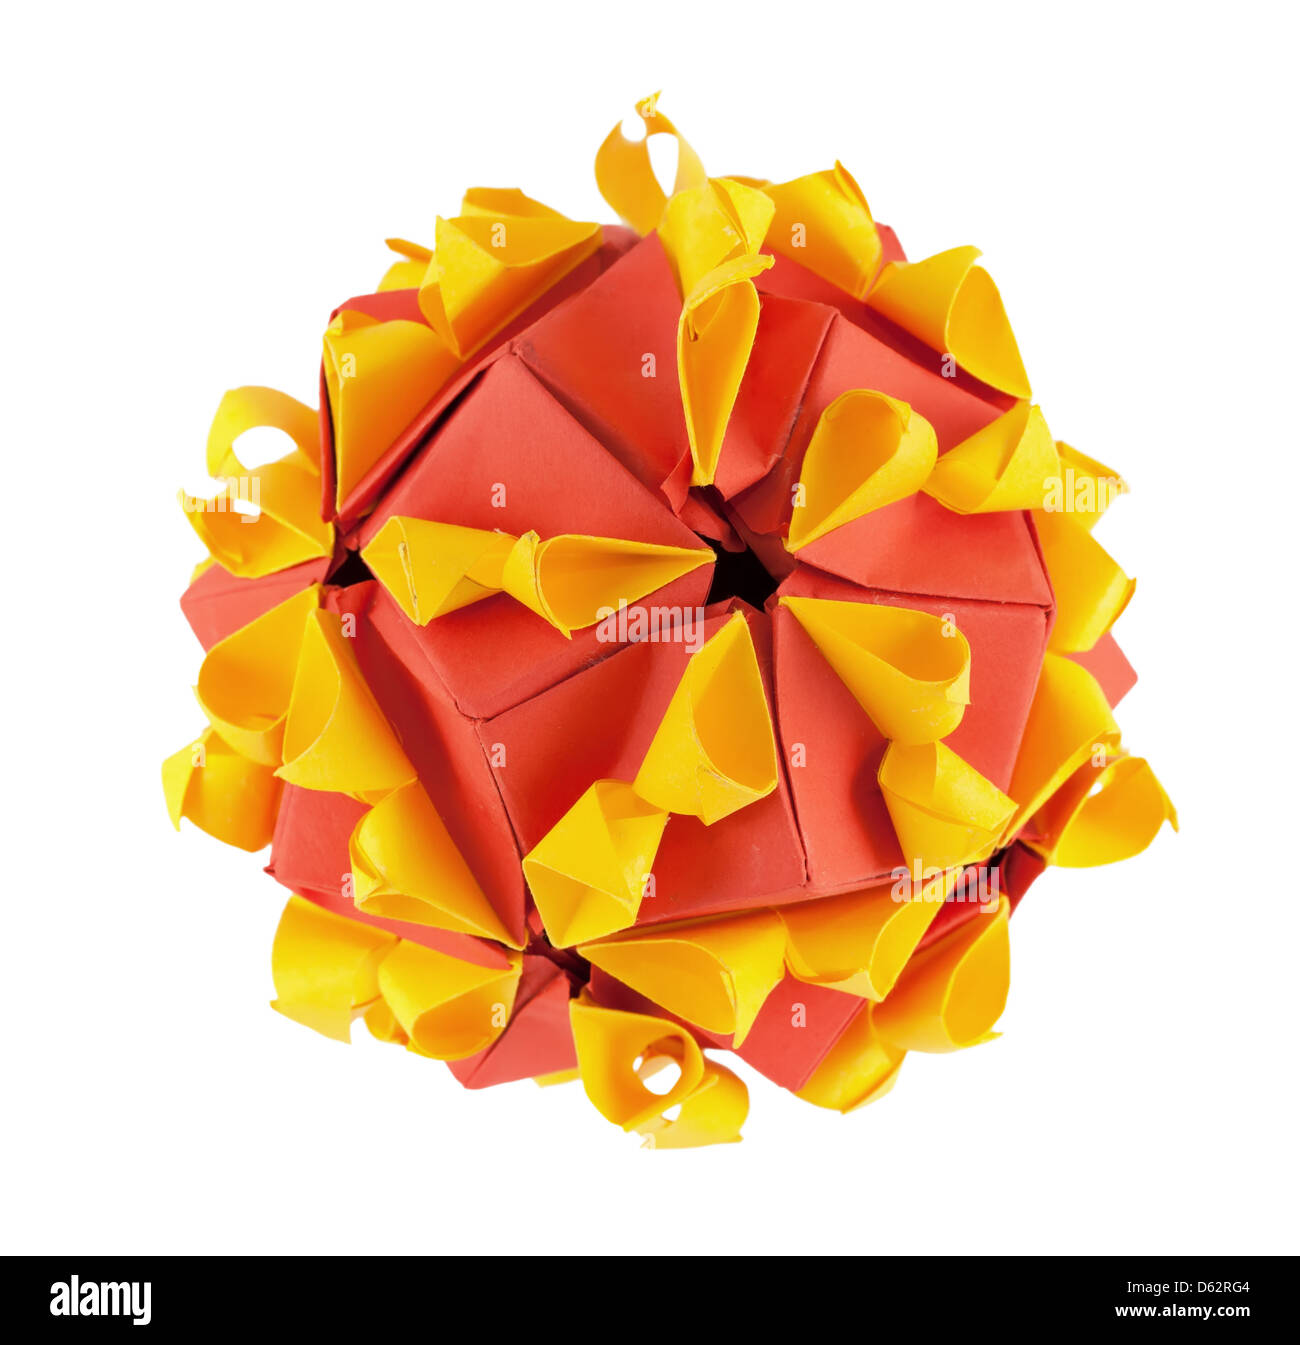 Origami kusudama jaune et rouge Banque D'Images